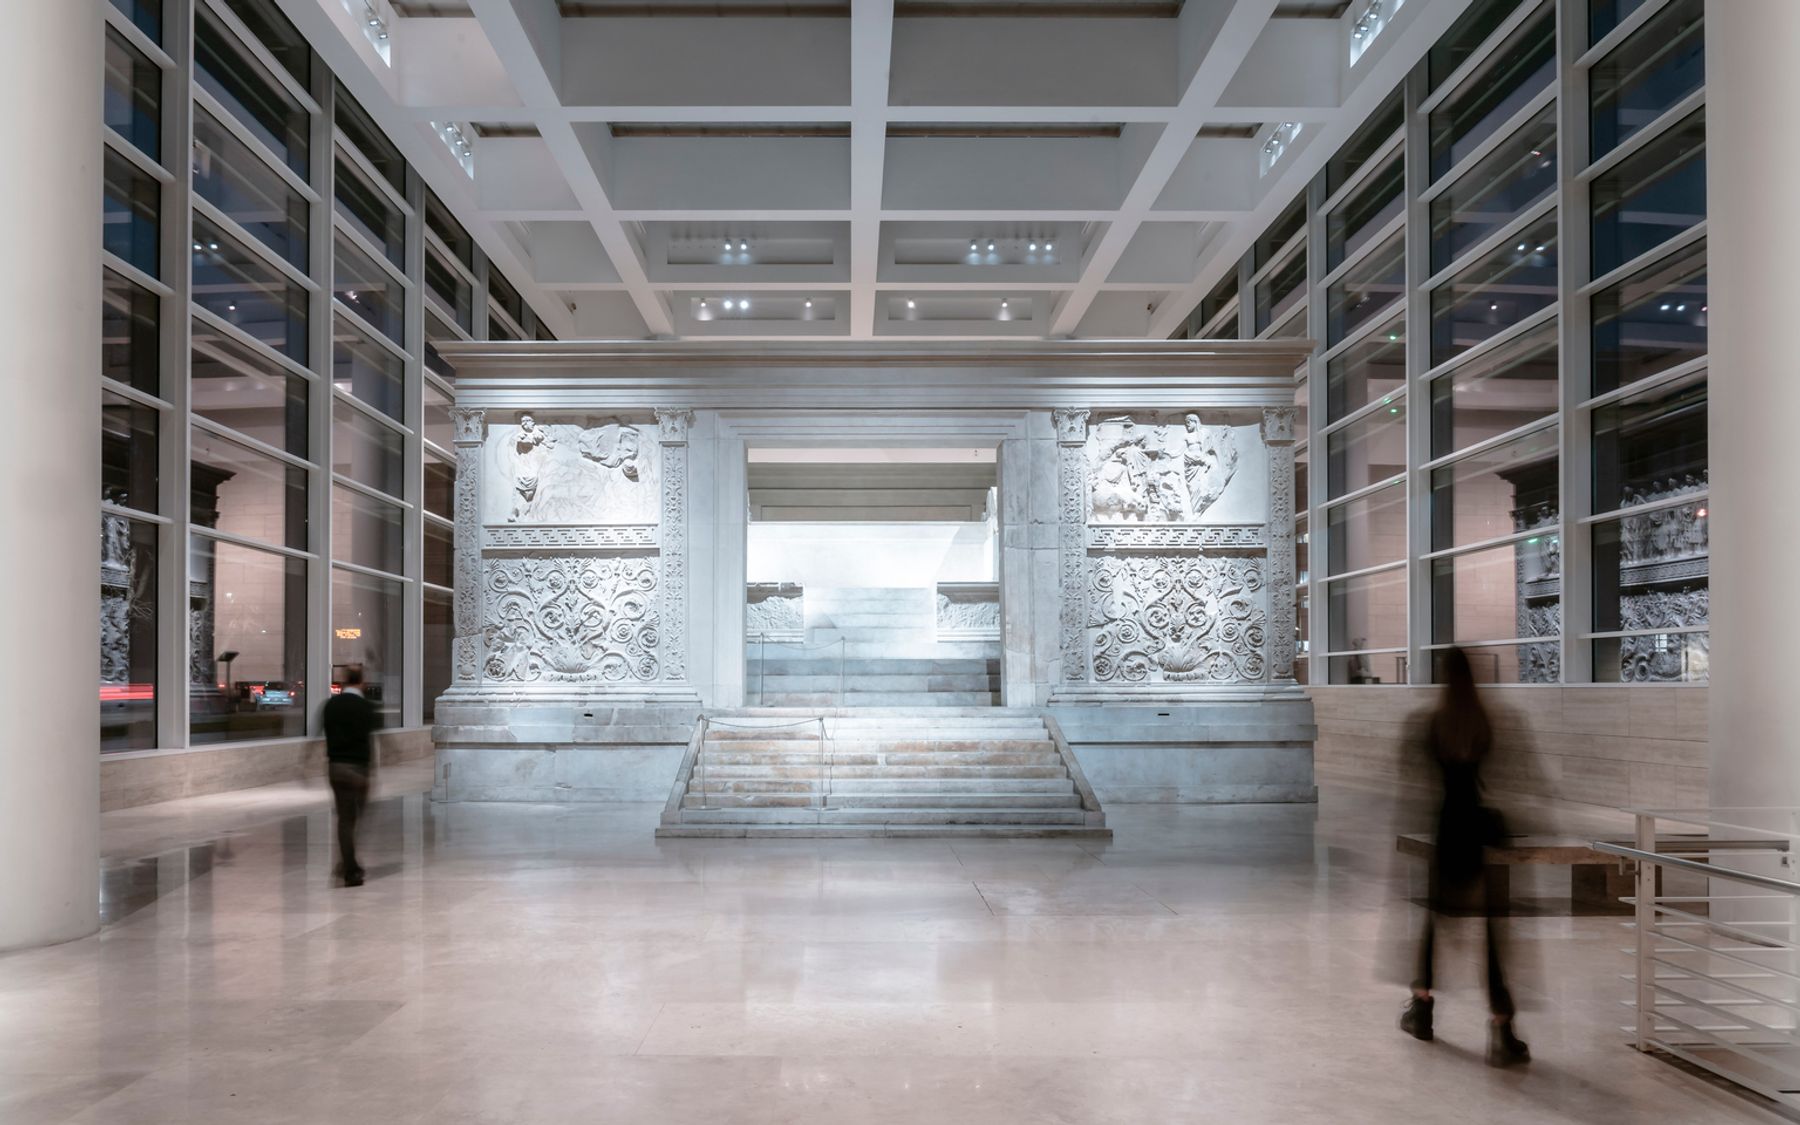 Ara Pacis, Rom. Architektur: Richard Meier & Partners Architects, New York / USA. Lichtplanung: Fisher Marantz Stone, New York. Fotografie: Marcela Schneider Ferreira, Florenz.